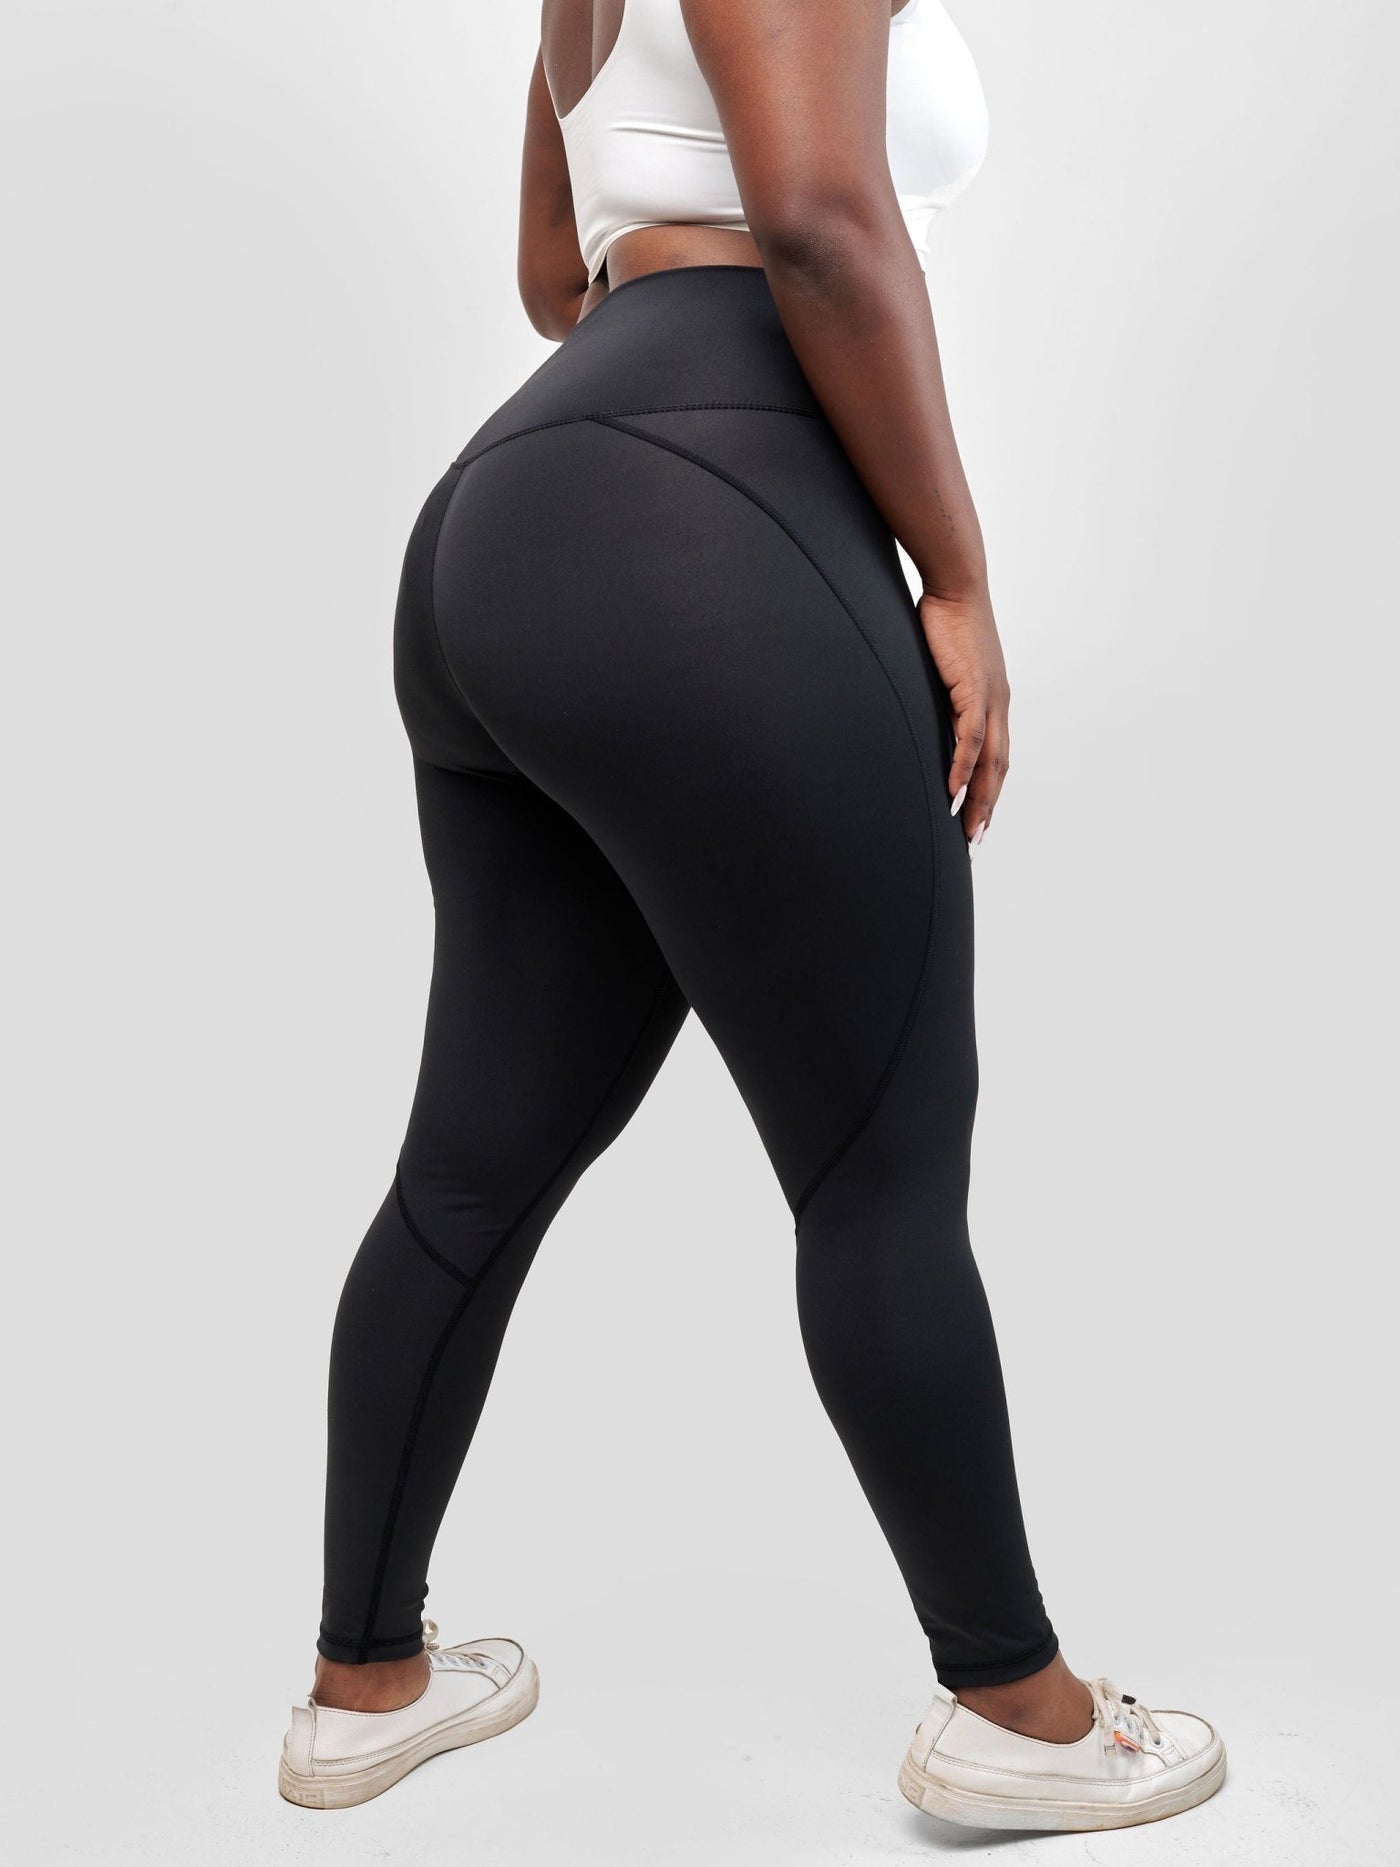 Ava Fitness Progress High Waisted Leggings - Black - Shopzetu